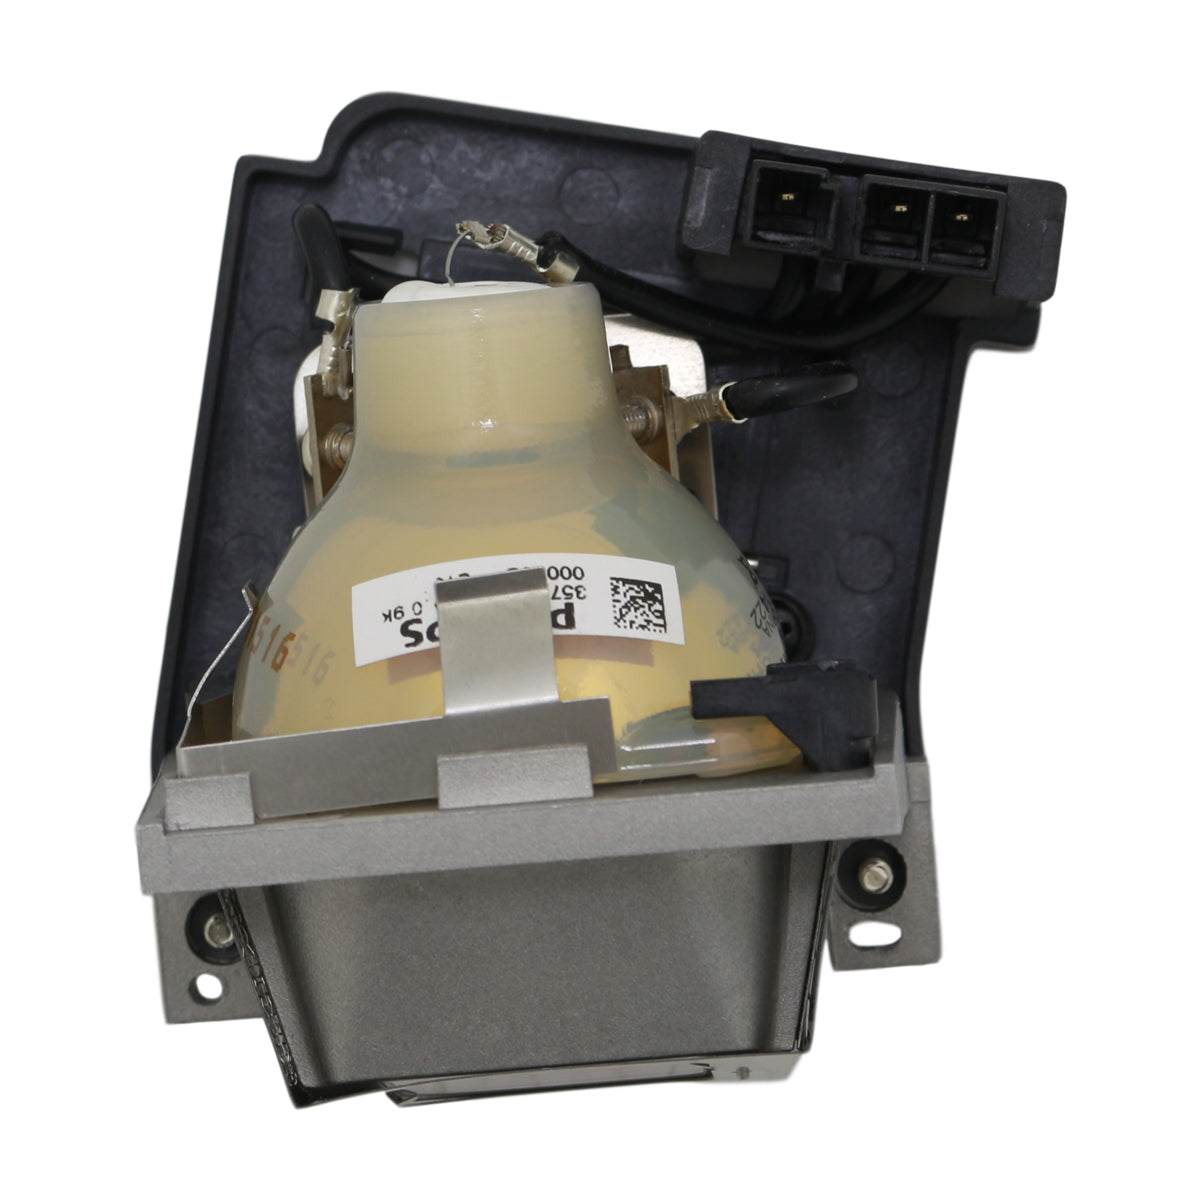 Kindermann P4184-1005 Philips Projector Lamp Module